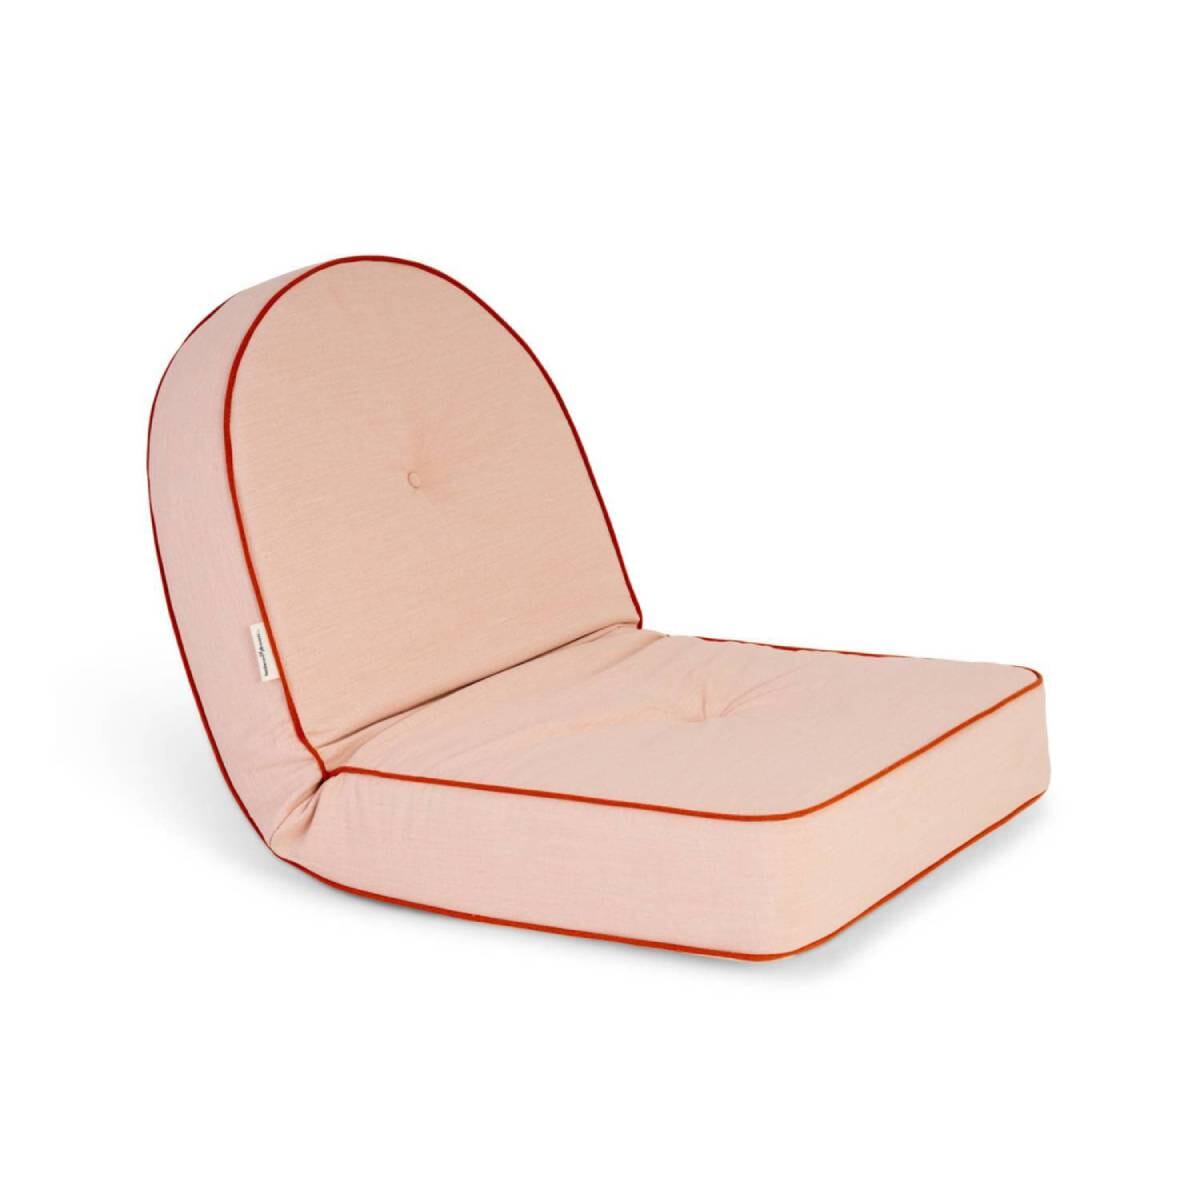 Studio image of Riviera pink reclining pillow lounger